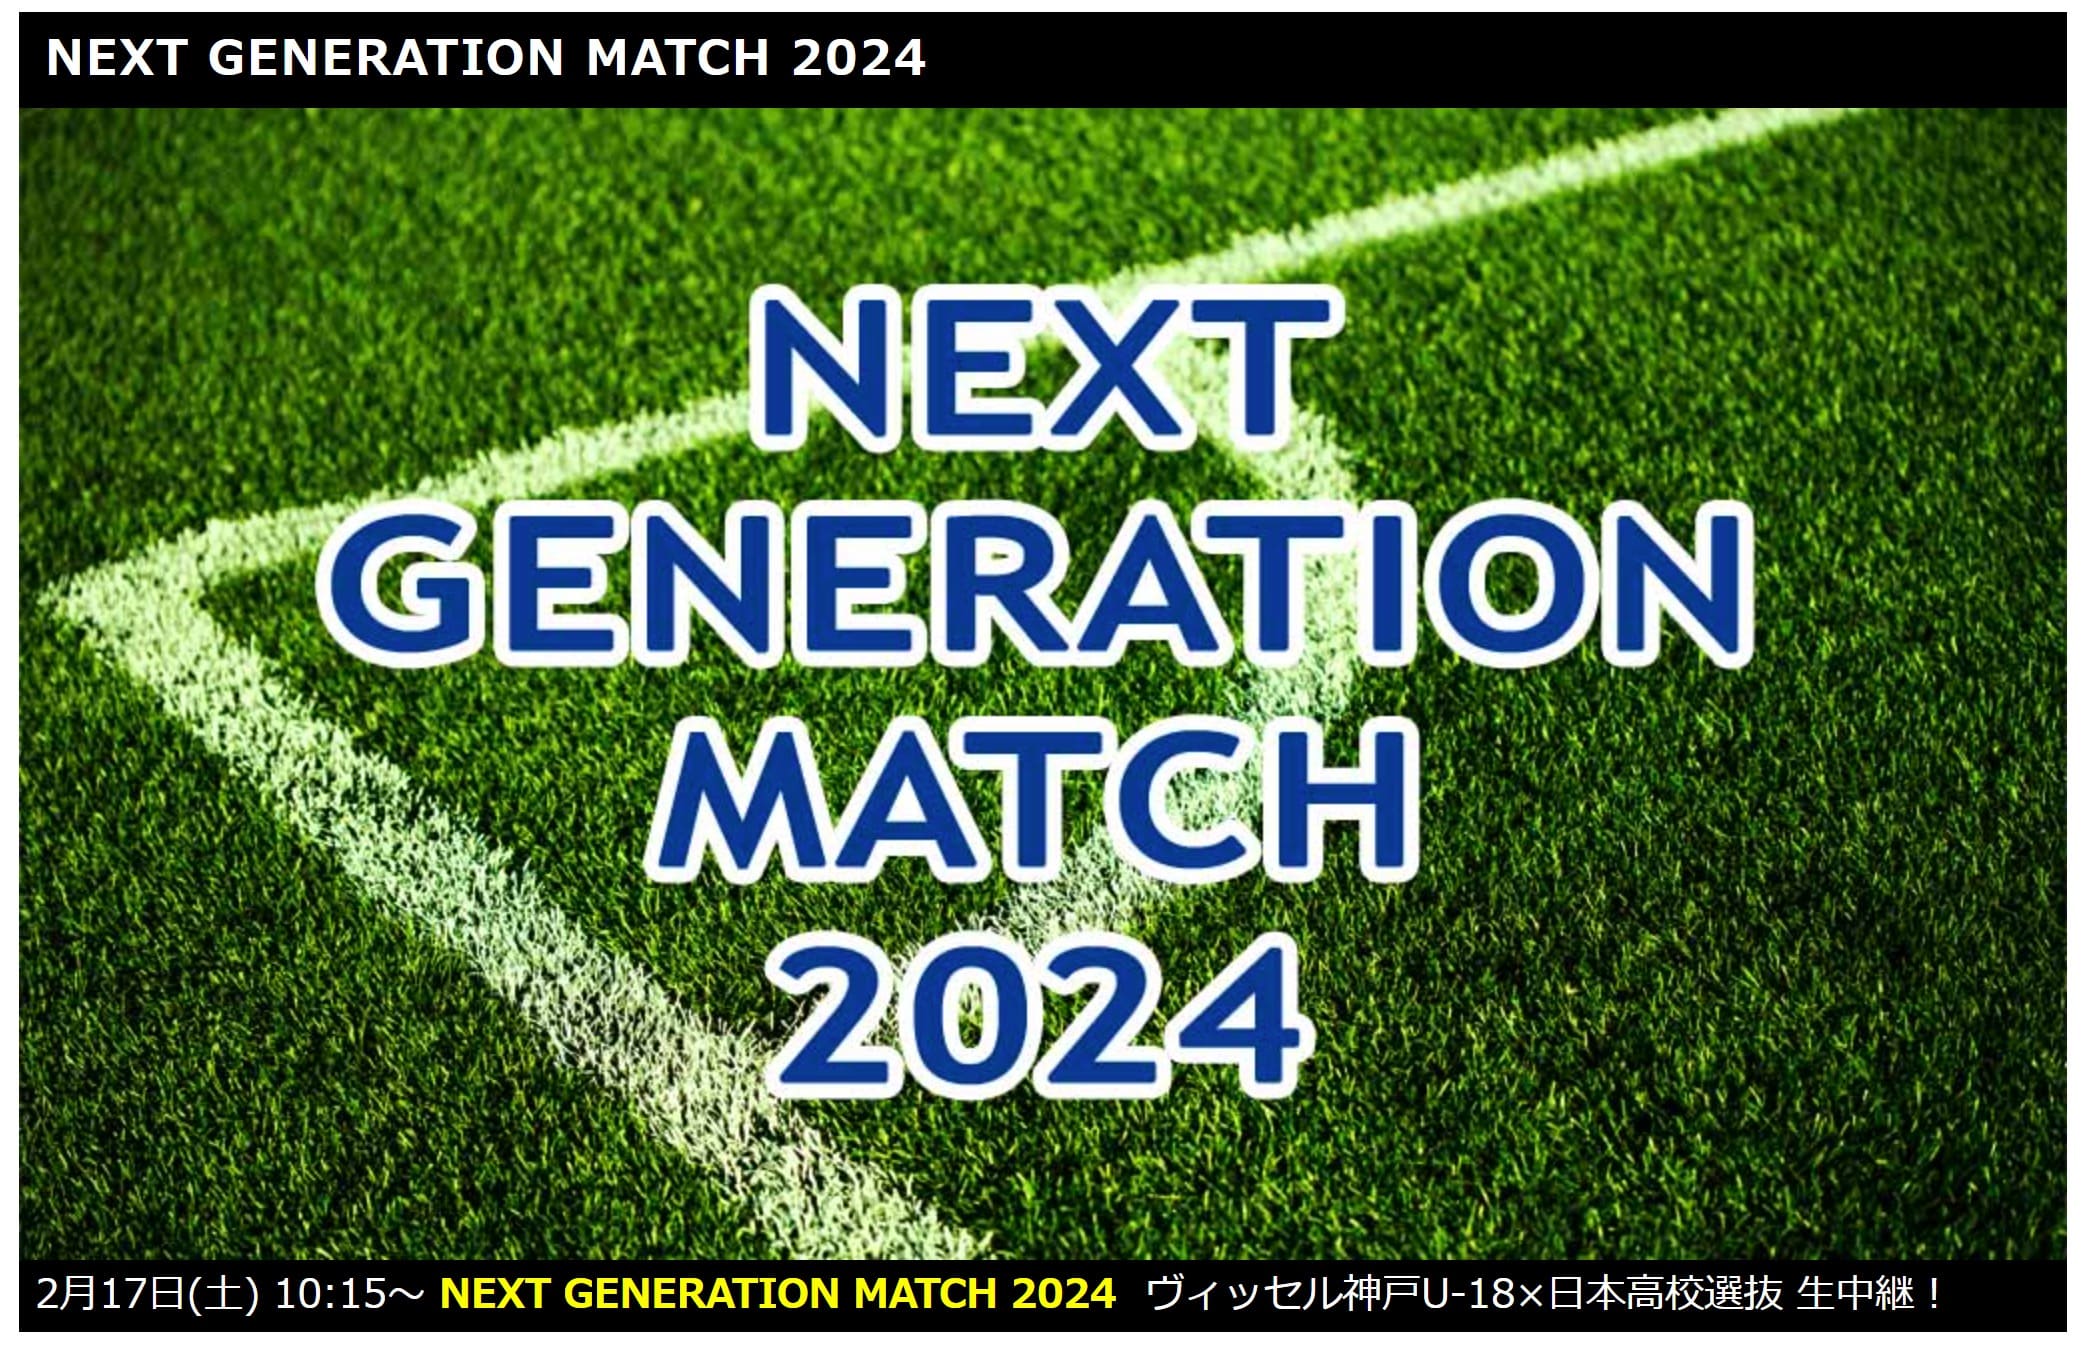 NEXT GENERATION MATCH 2024 - サッカー - 日テレジータス - www.gtasu.com